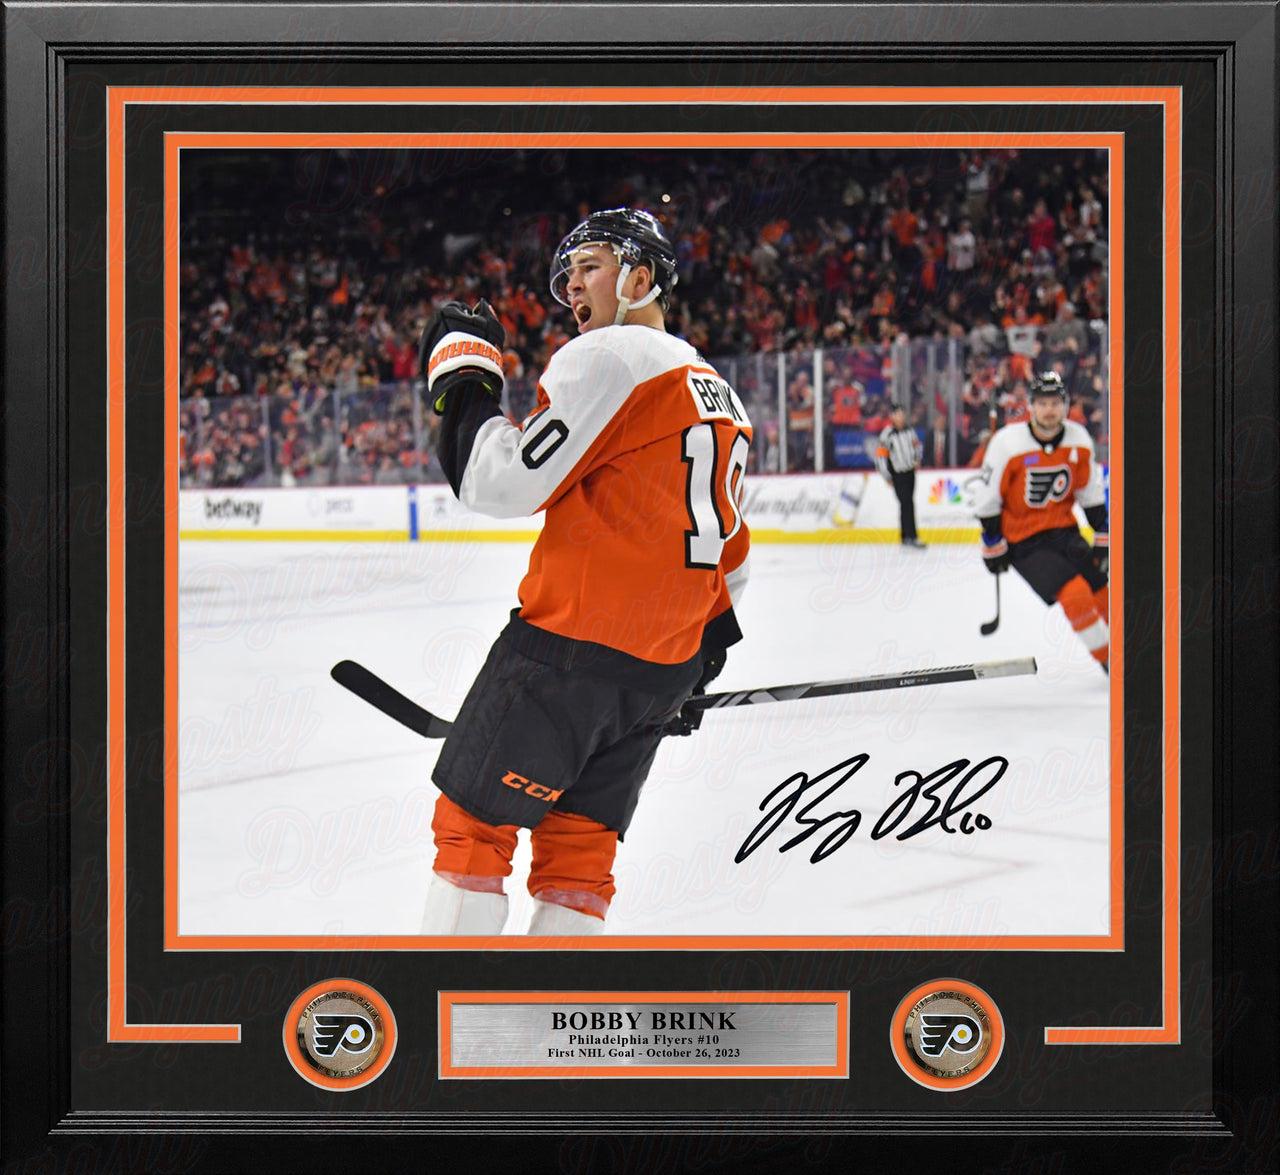 Bobby Brink Fist Pump Autographed Philadelphia Flyers 11" x 14" Framed Hockey Photo